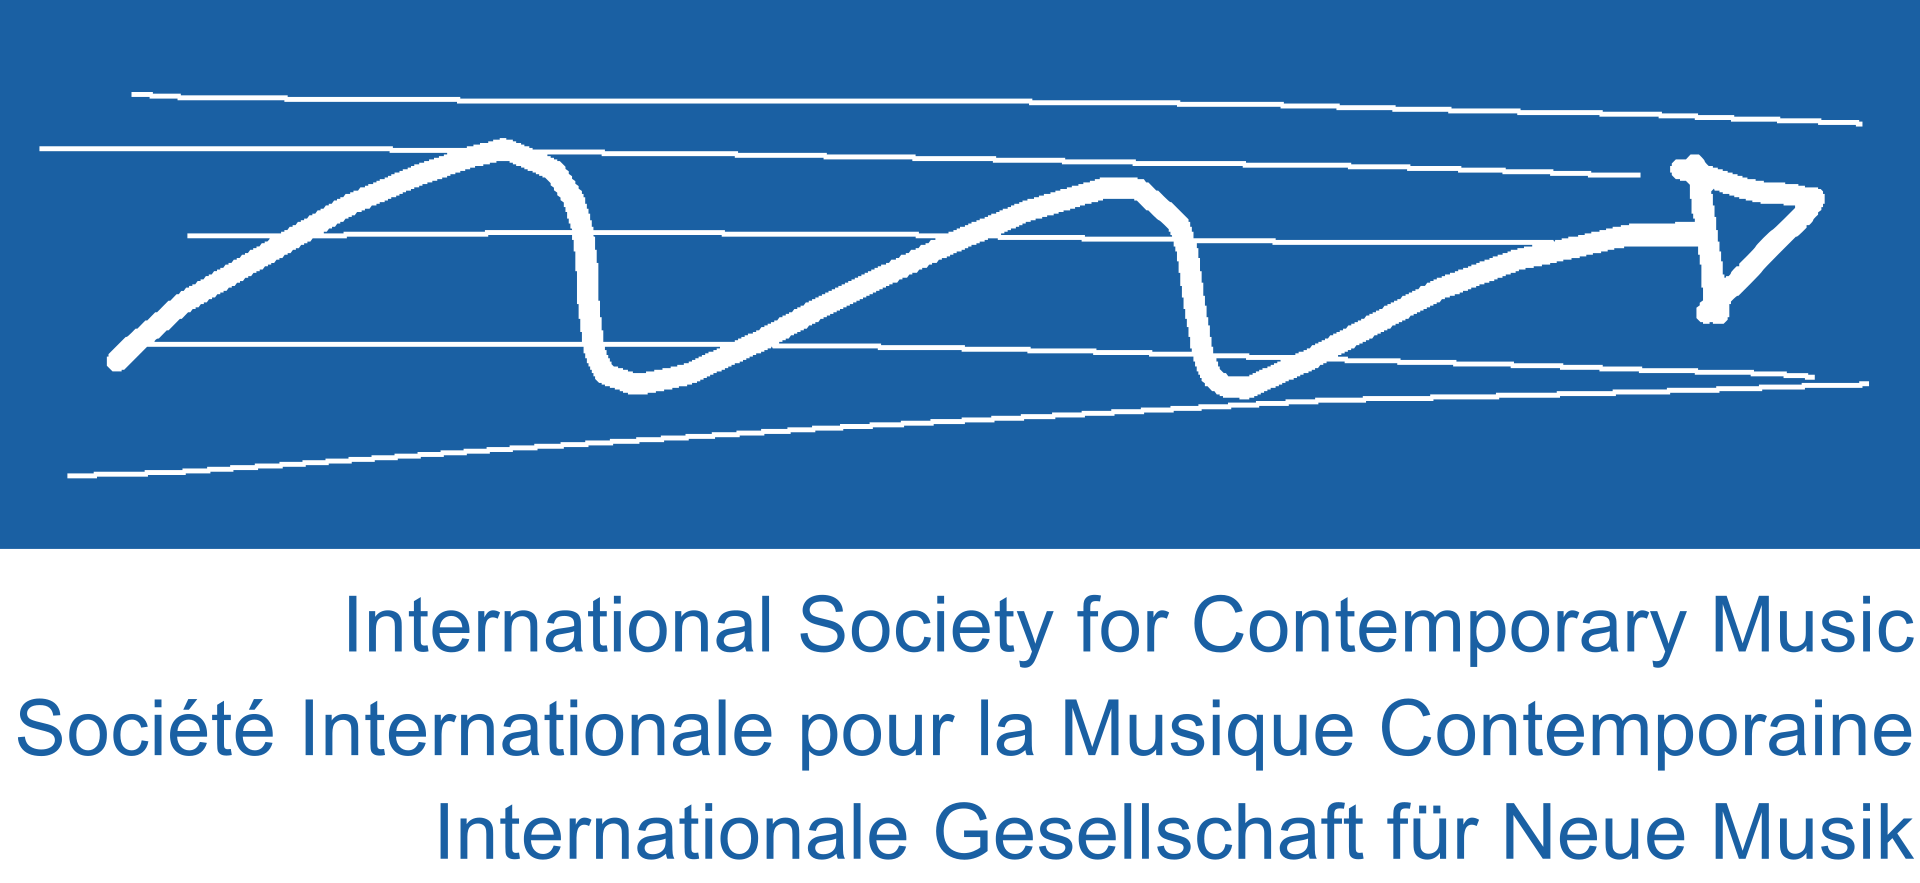 International Society of Contemporary Music logo